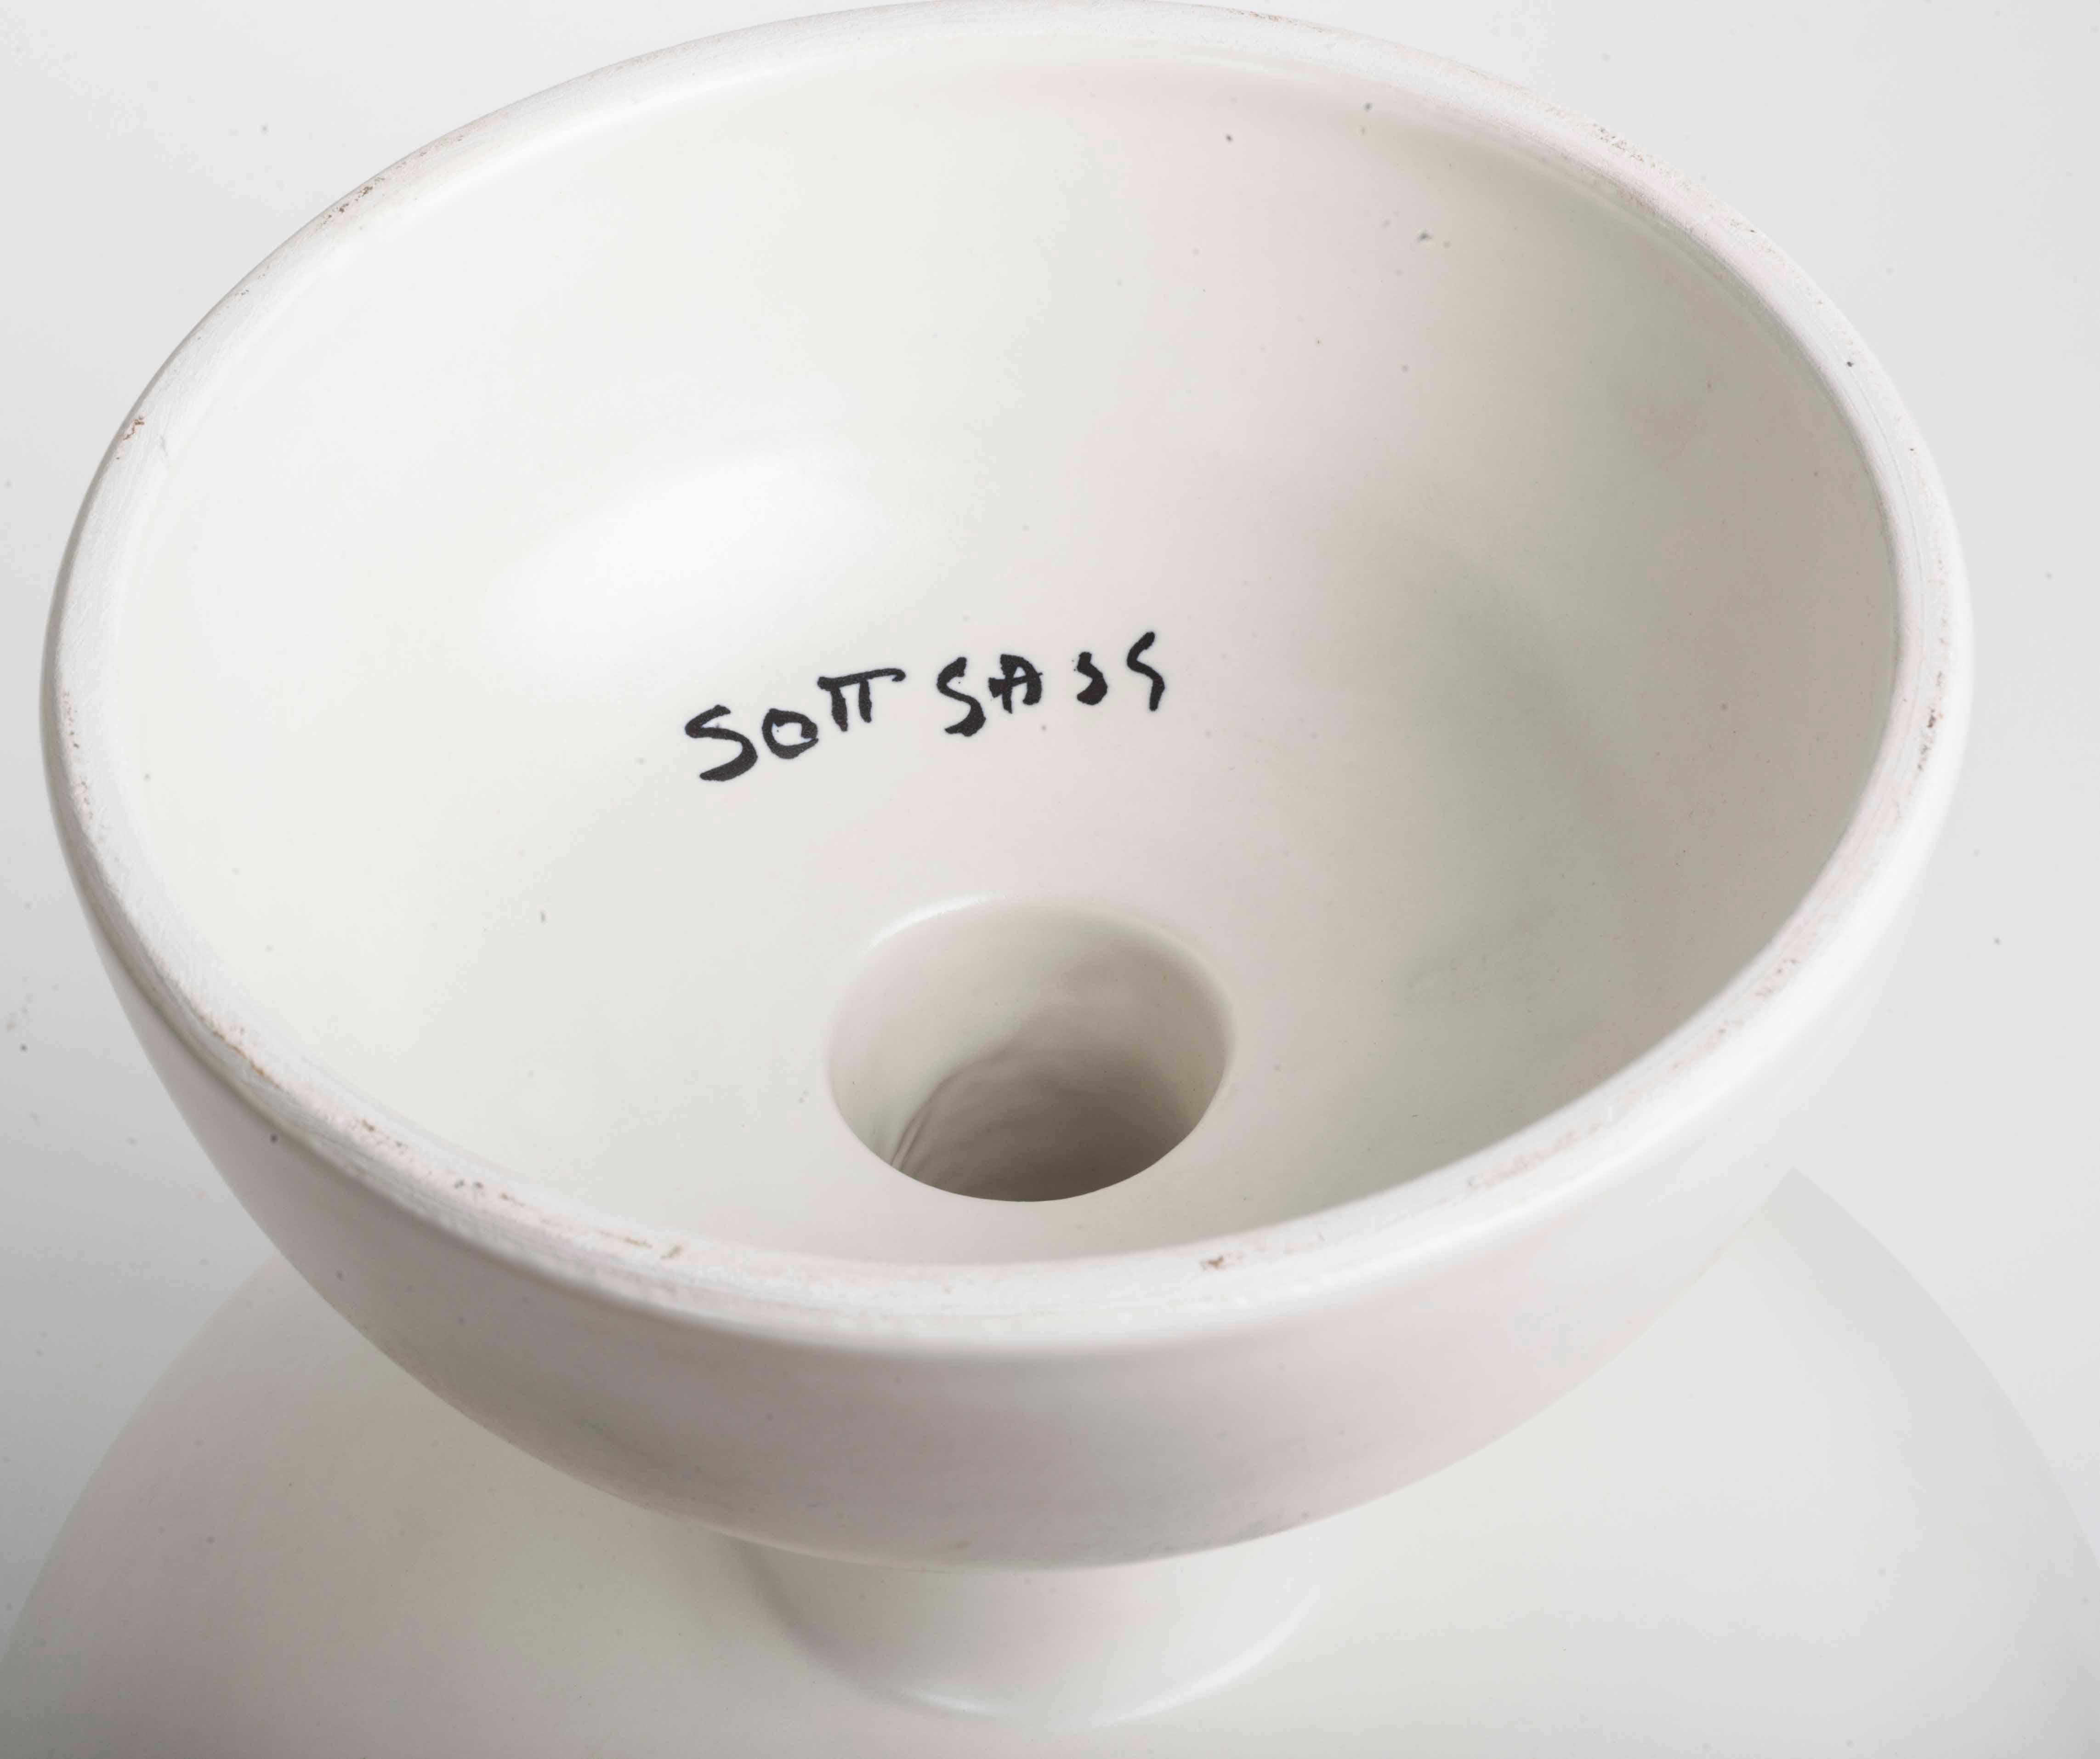 Ettore Sottsass Green and White Ceramic Vase 